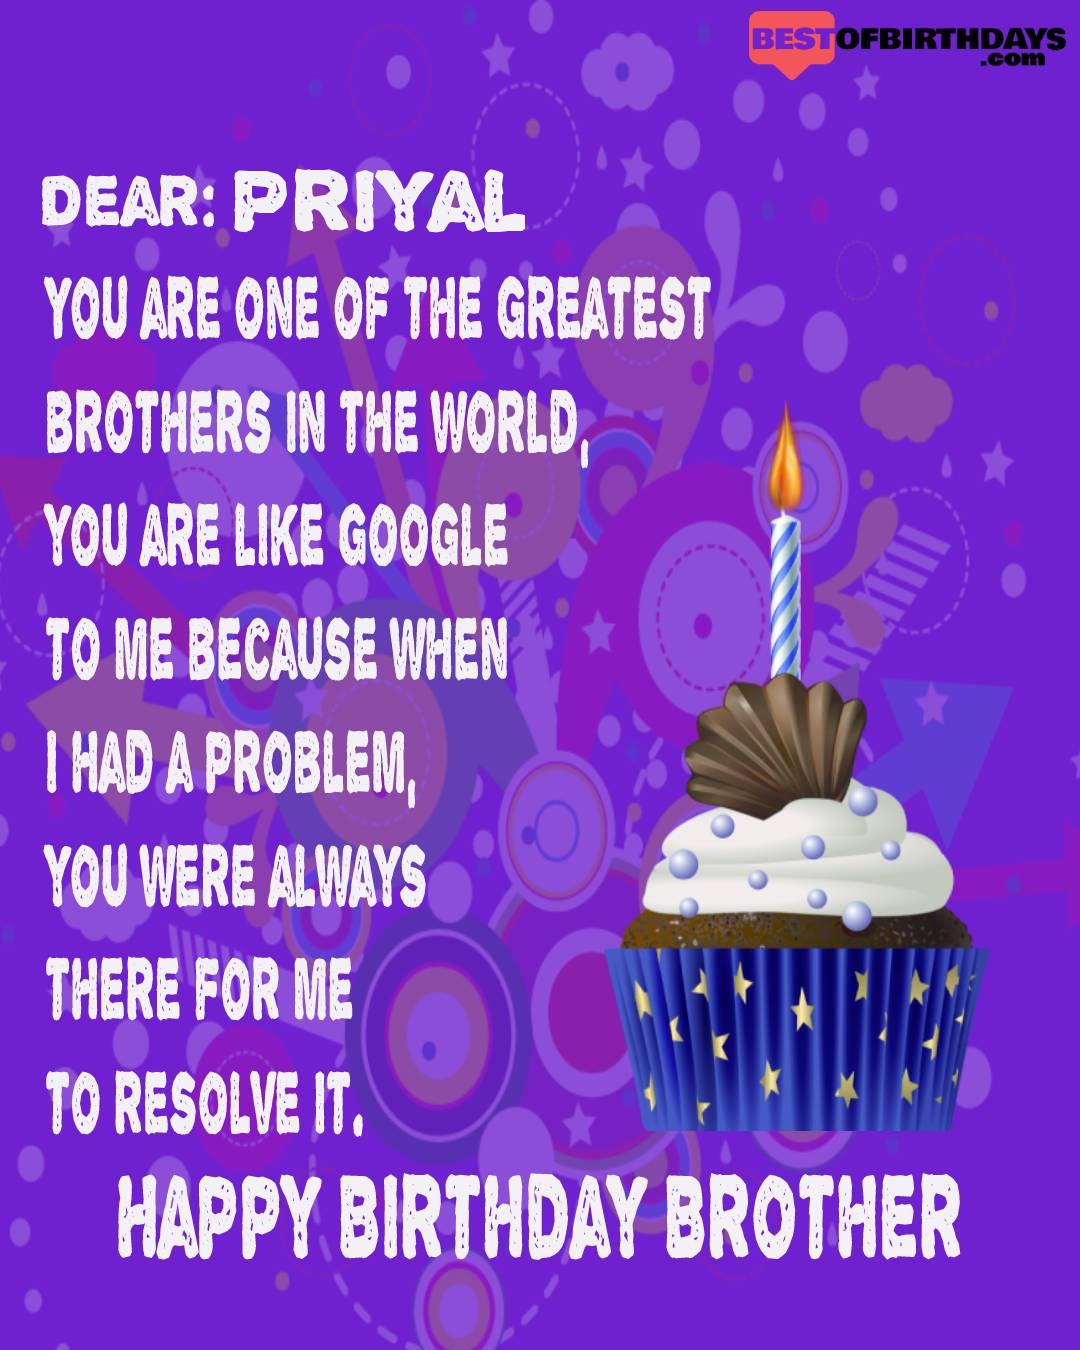 Happy birthday priyal bhai brother bro